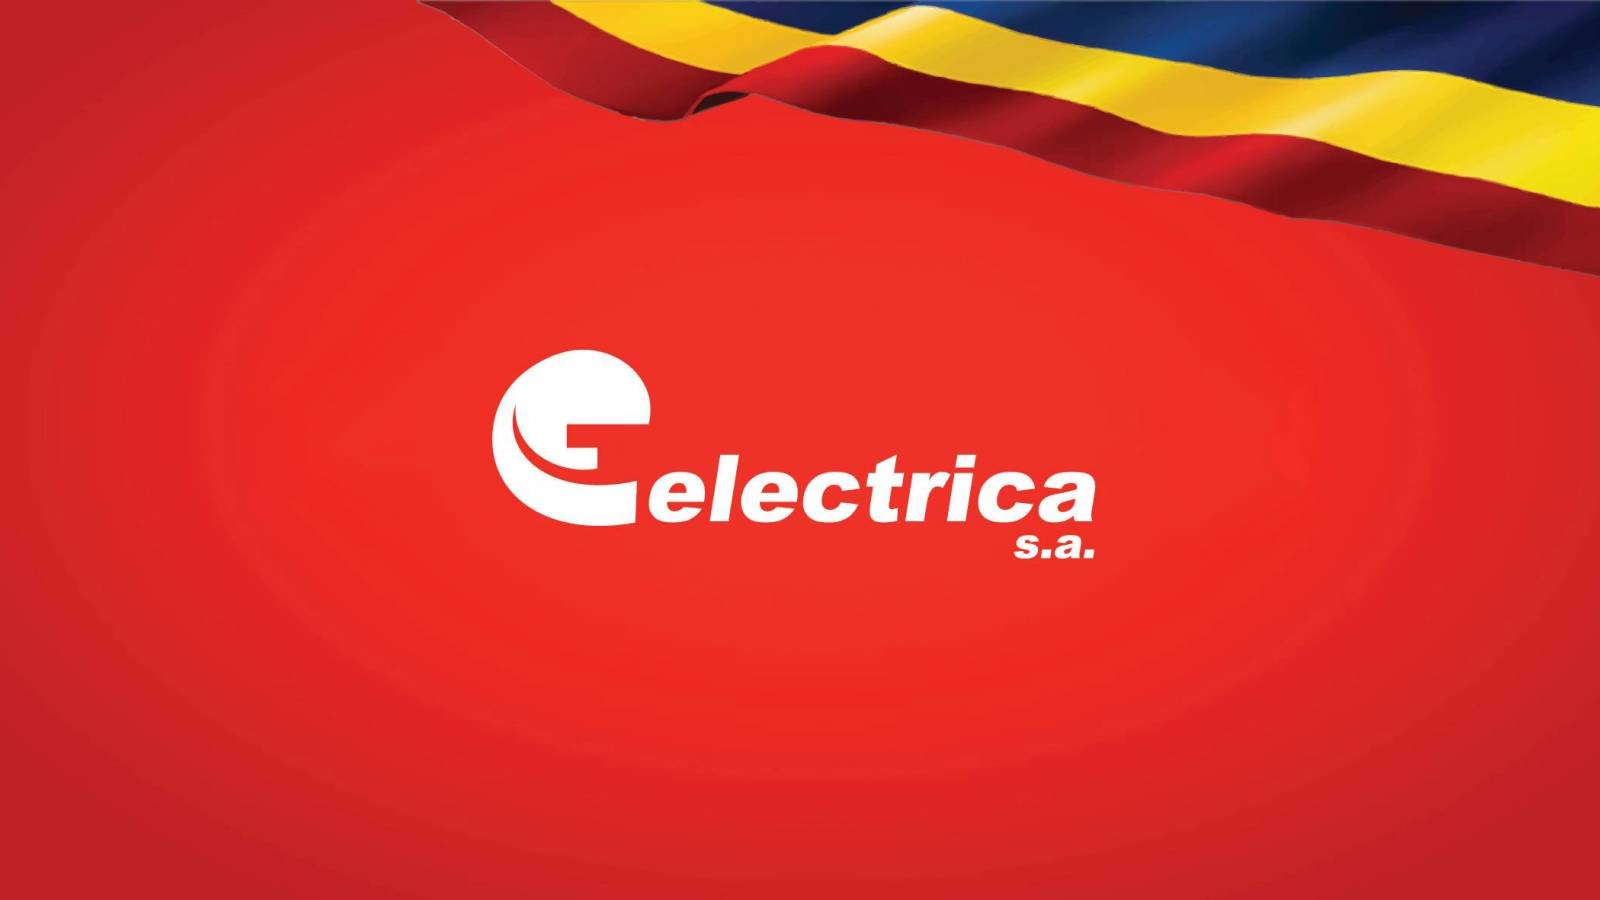 Electrica Clarificarile Oficiale ULTIM MOMENT Puse ATENTIA Clientilor Romania